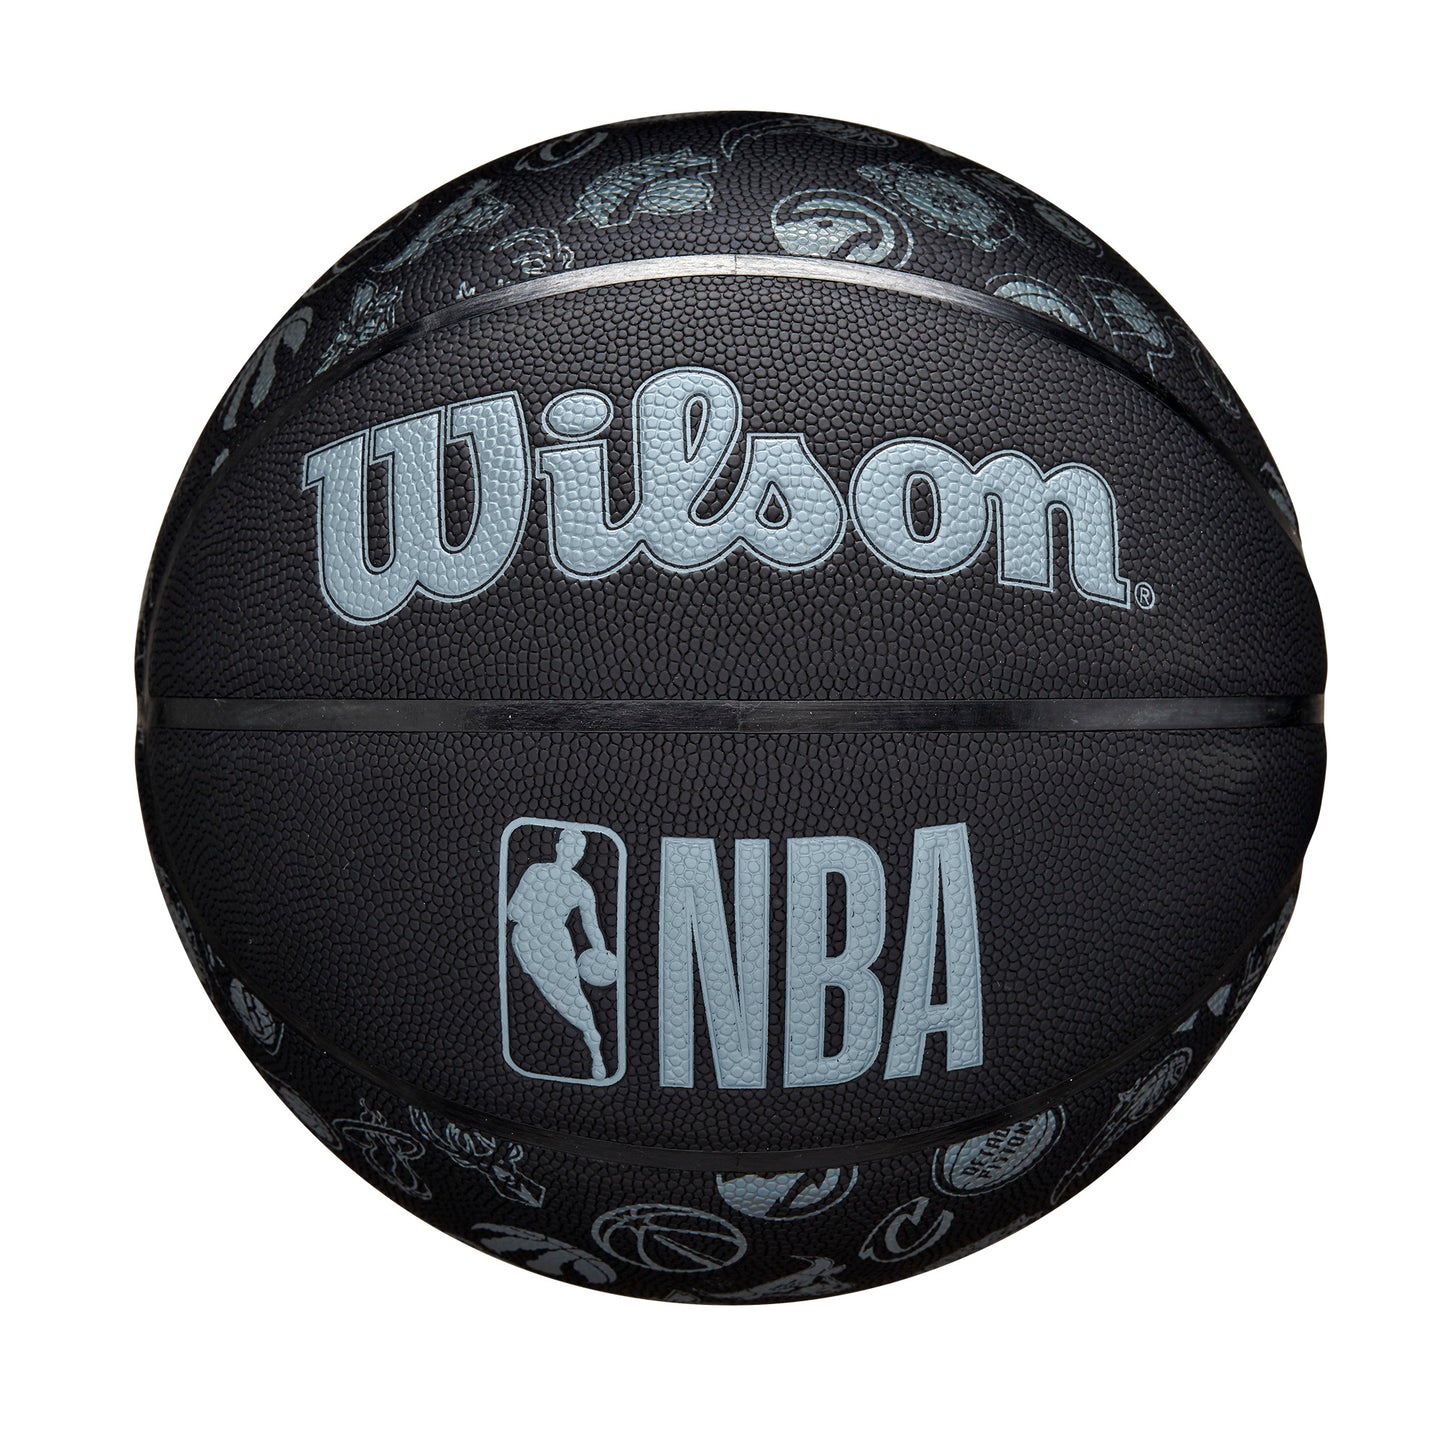 Wilson NBA ALL TEAM BASKETBALL Black WTB1300XB